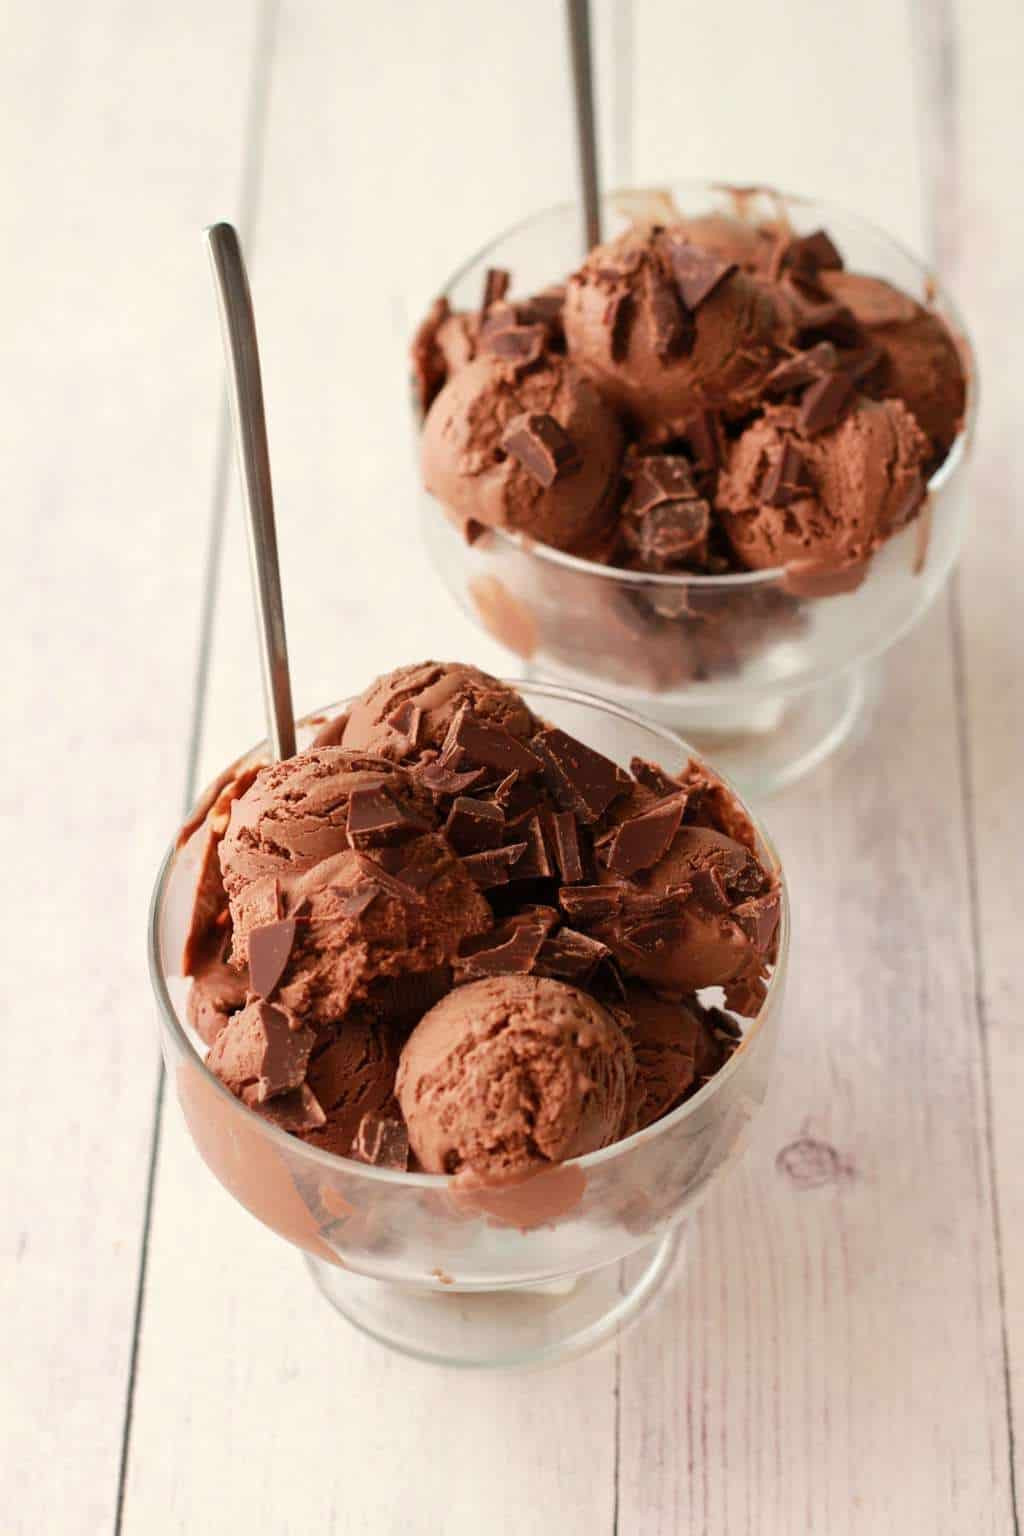 Vegan Chocolate Ice Cream Recipes
 The Most Decadent Vegan Chocolate Ice Cream Loving It Vegan